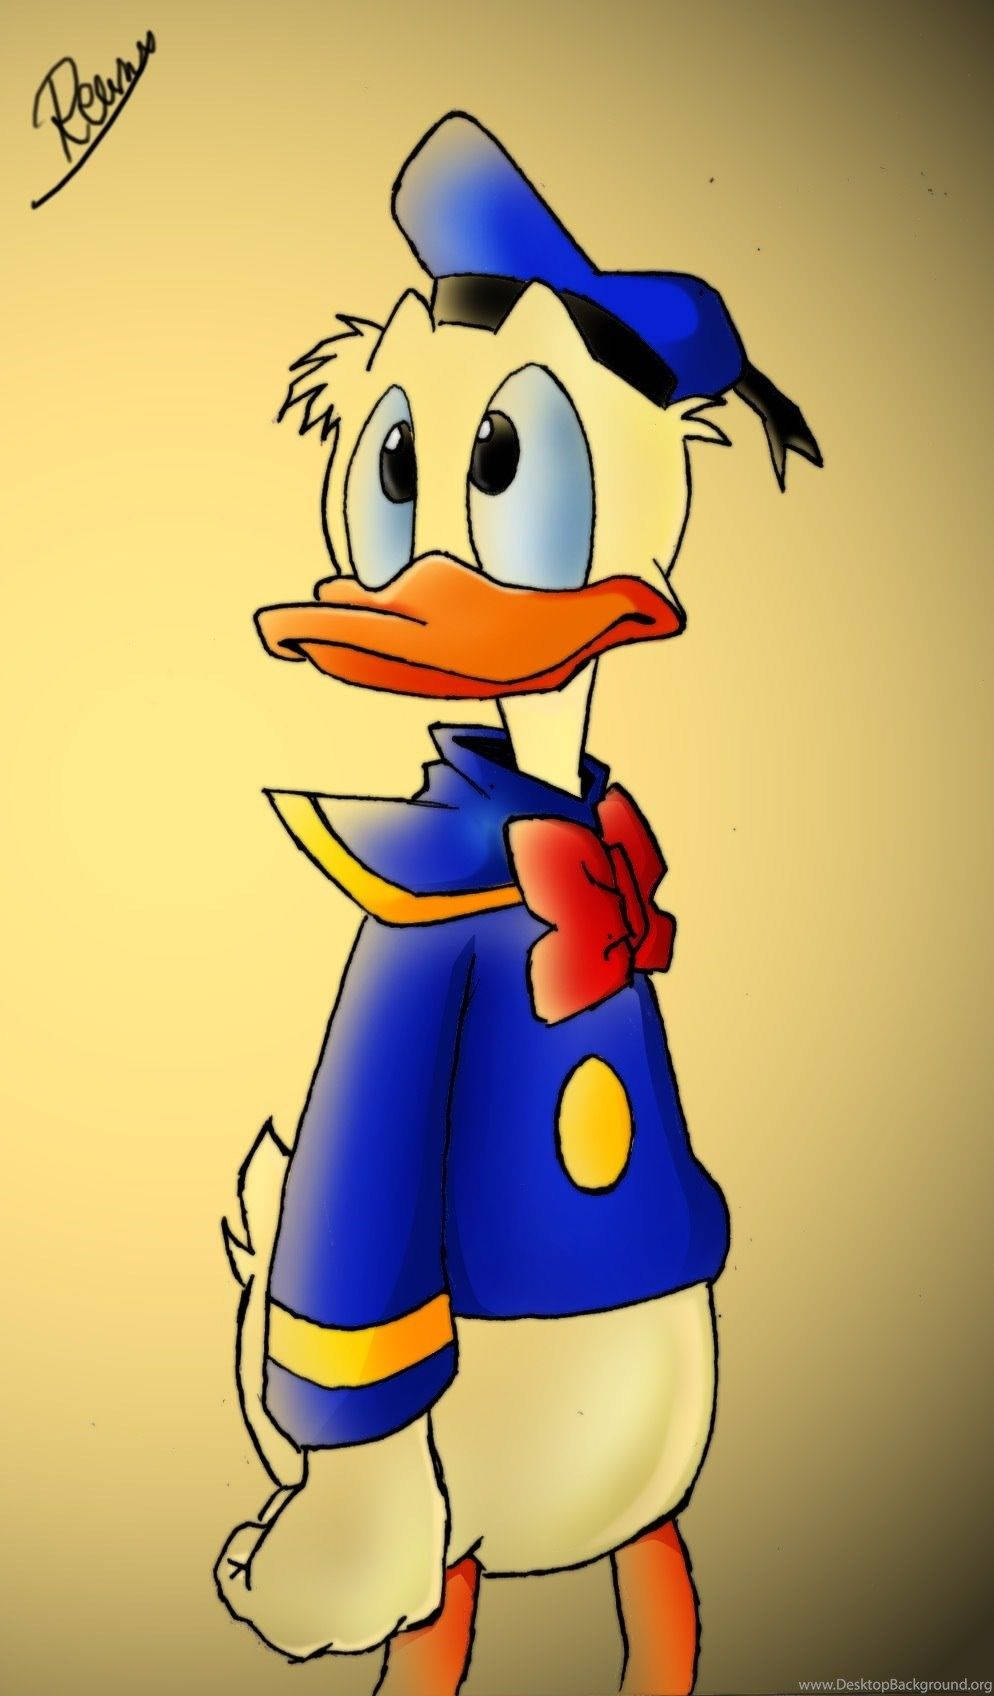 Donald Duck In Yellow Vignette Background Wallpaper